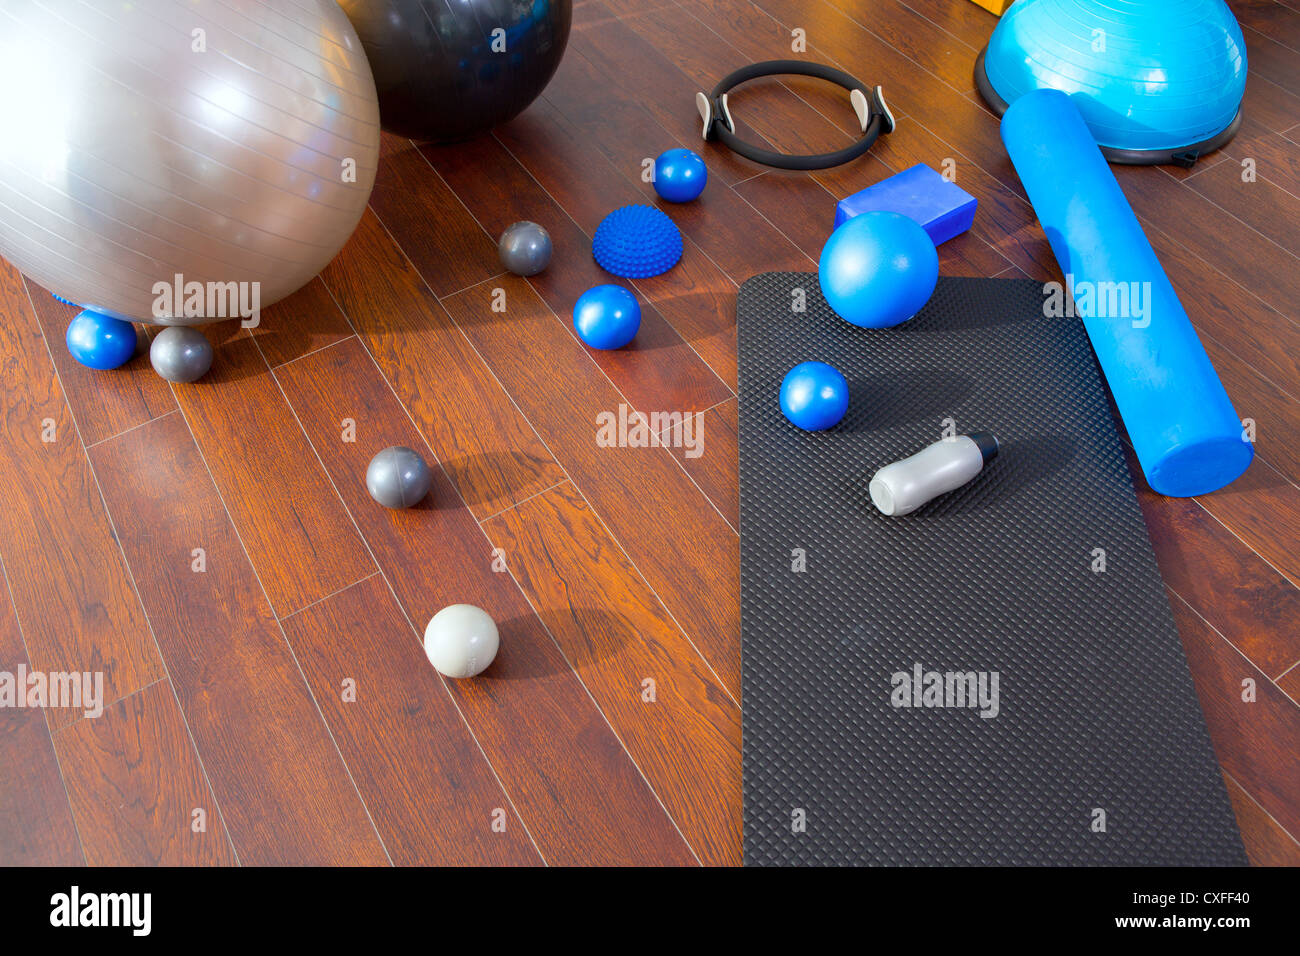 Aerobic Pilates stuff like mat balls roller magic ring rubber bands on wooden floor Stock Photo